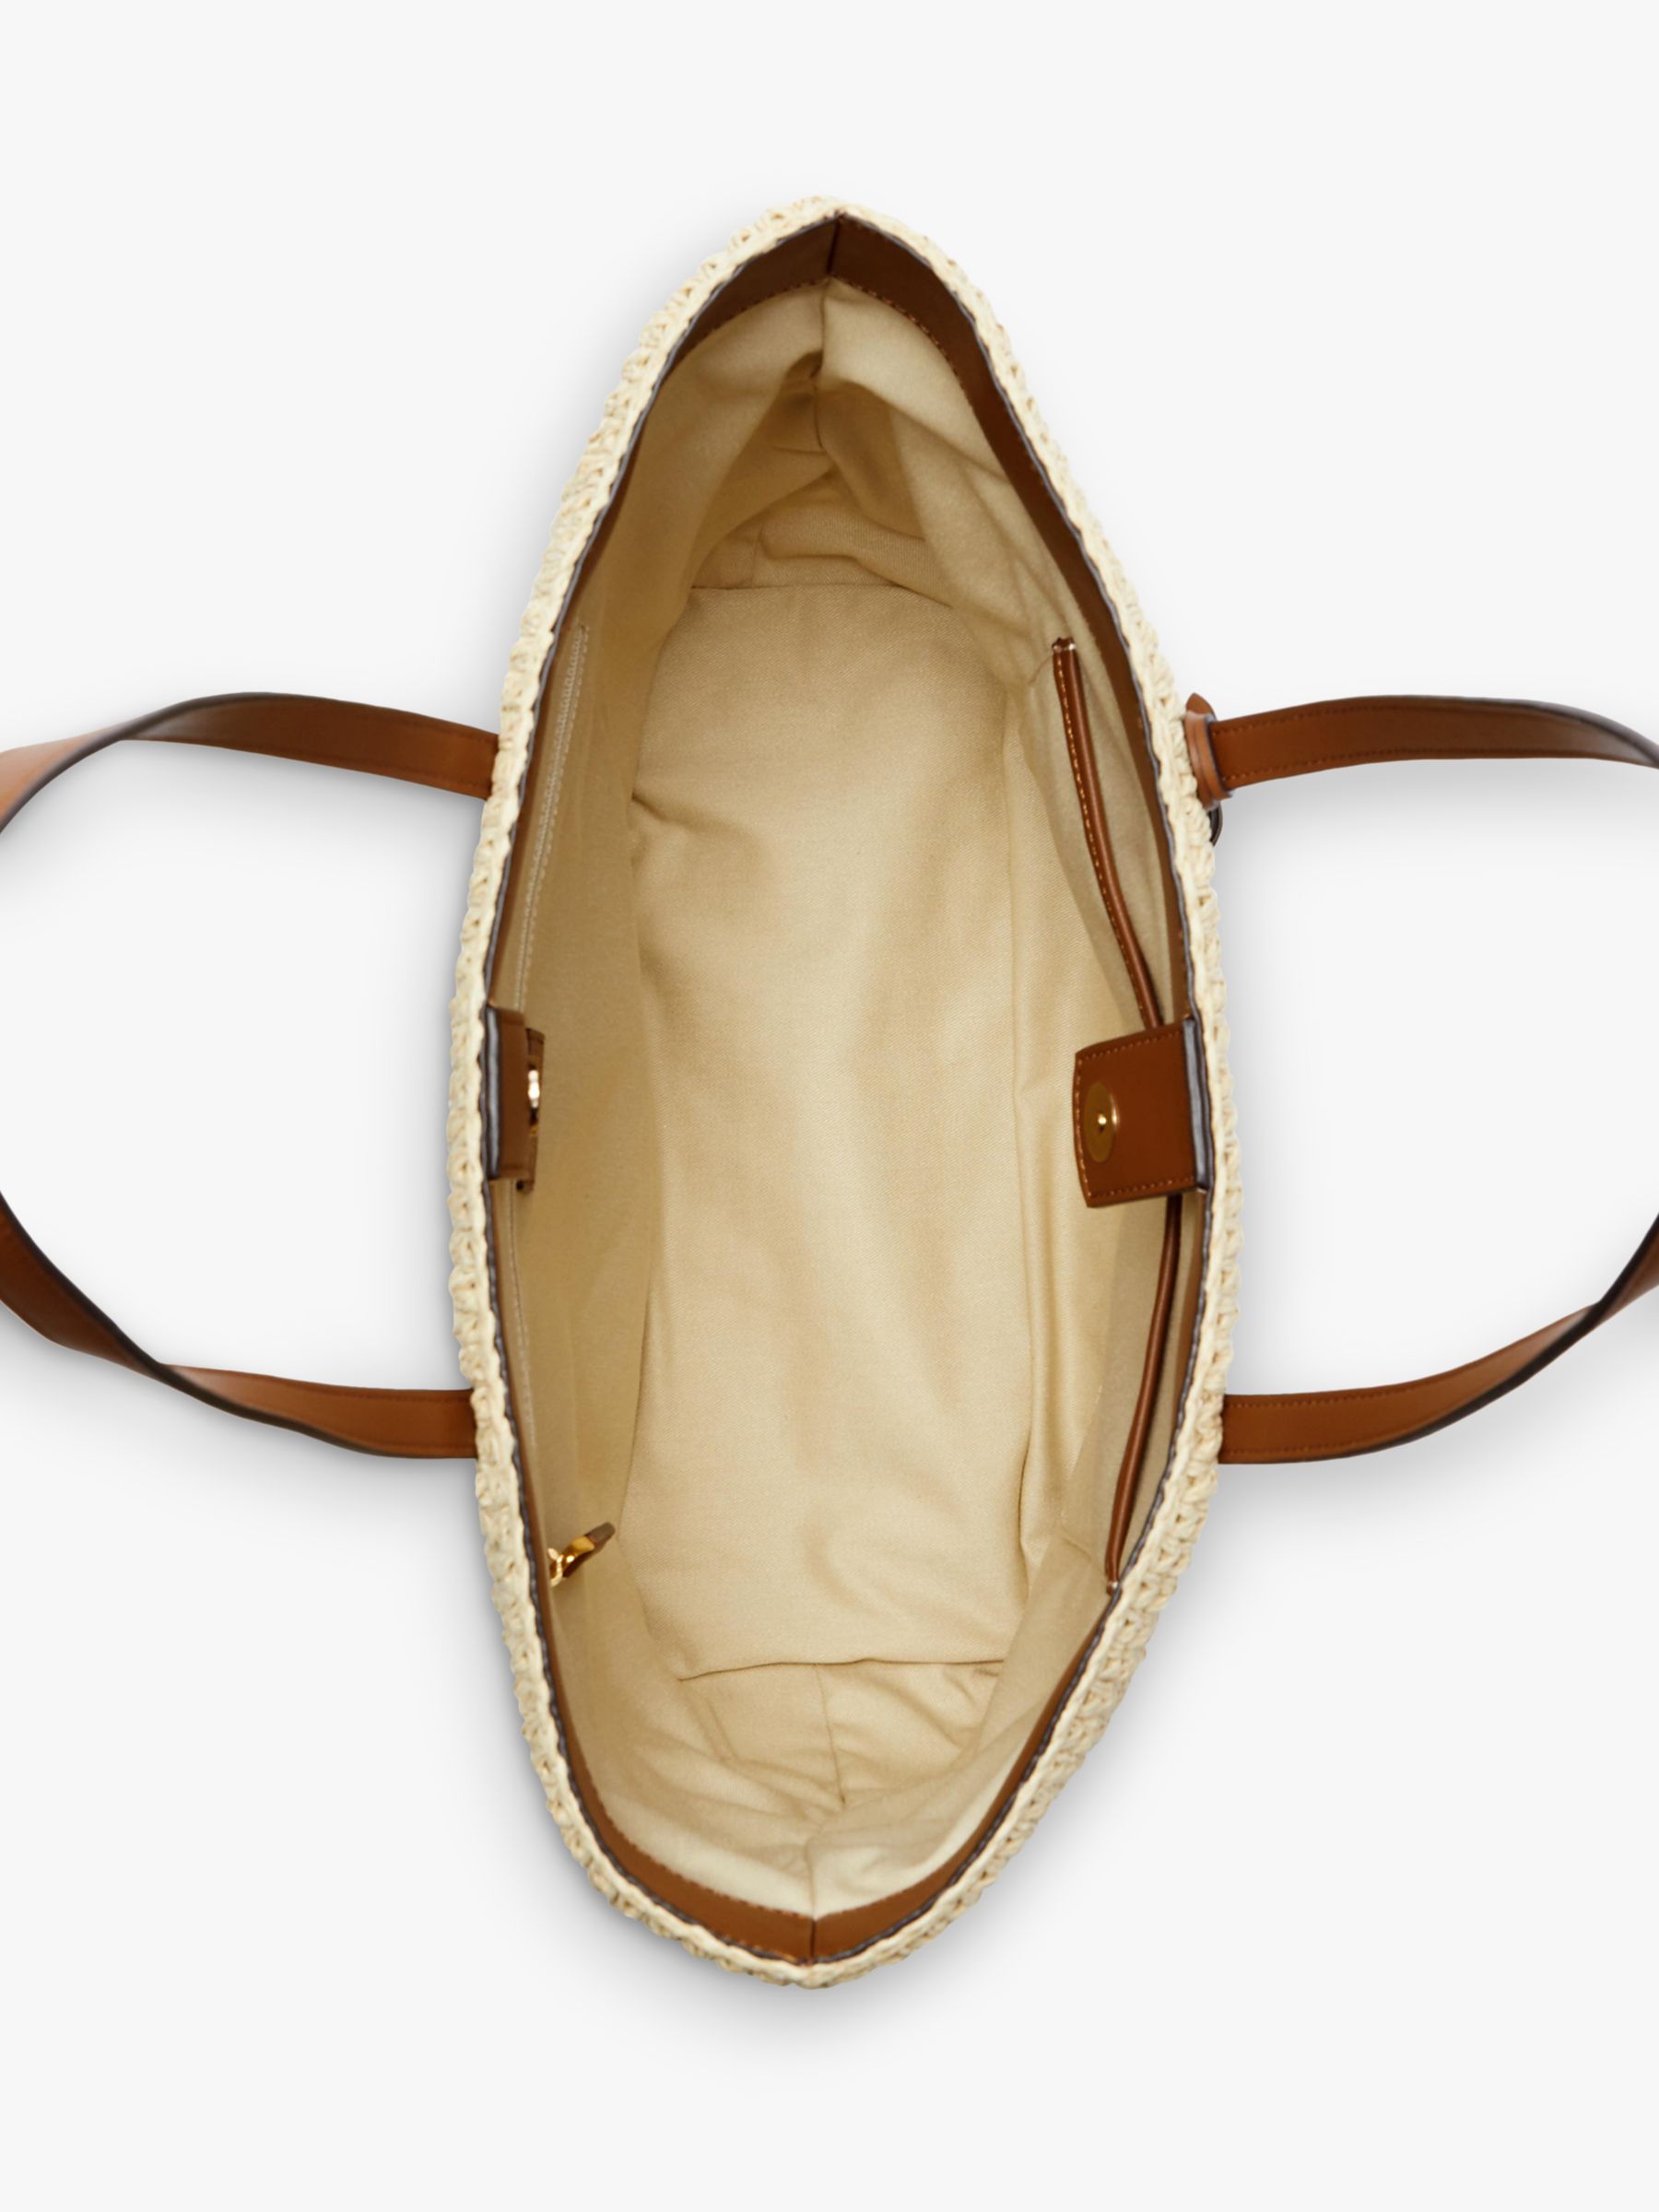 Buy Lauren Ralph Lauren Straw Tote Bag, Natural Online at johnlewis.com